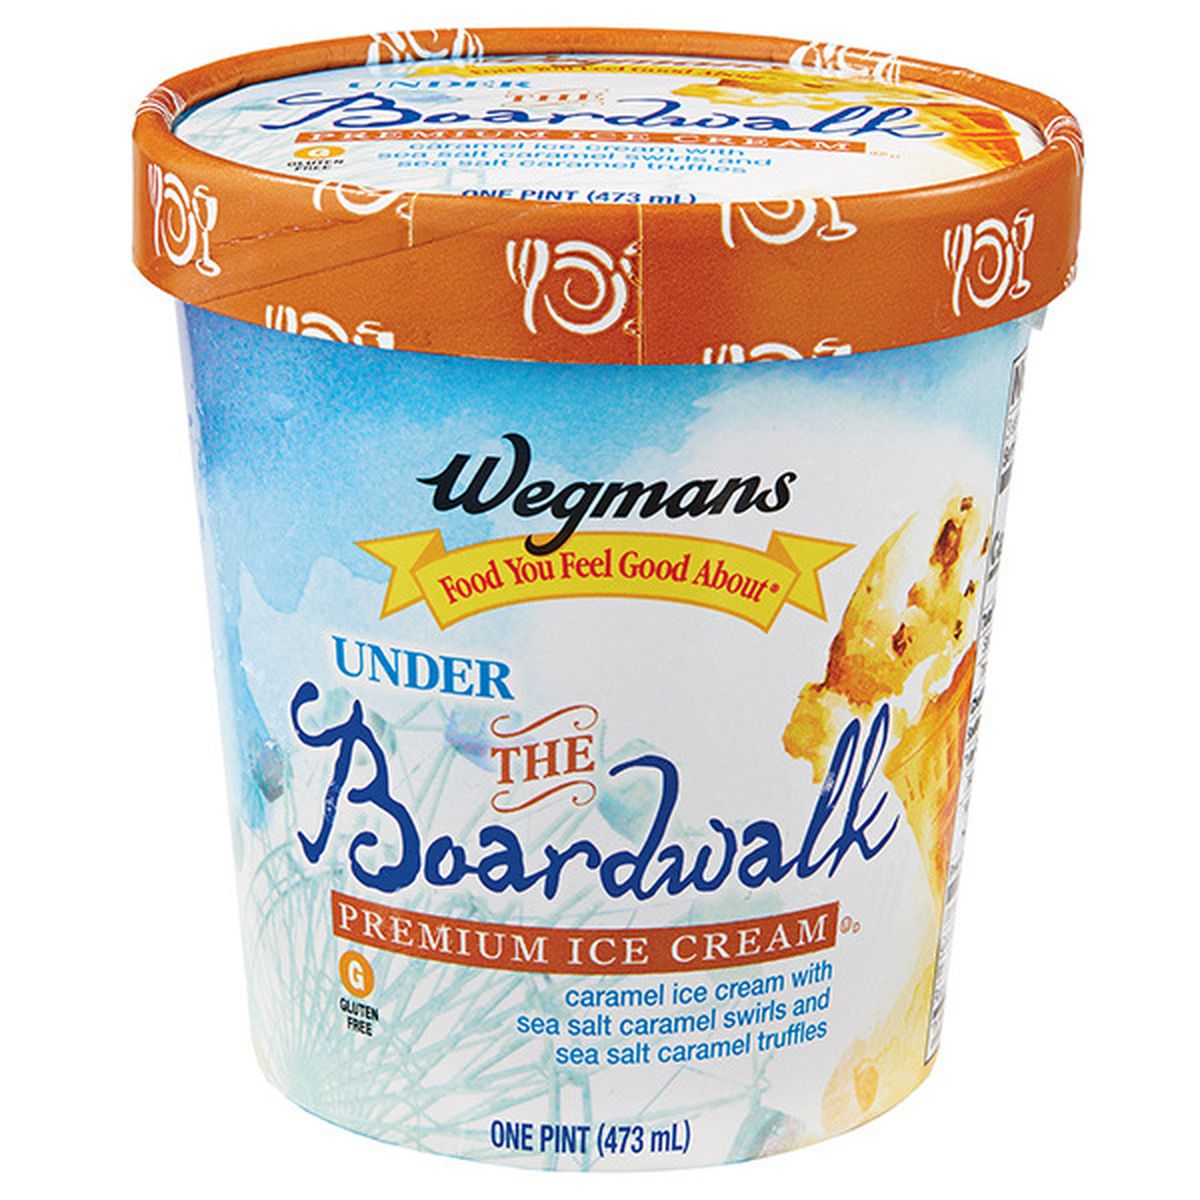 Calories in Wegmans Under The Boardwalk Premium Ice Cream